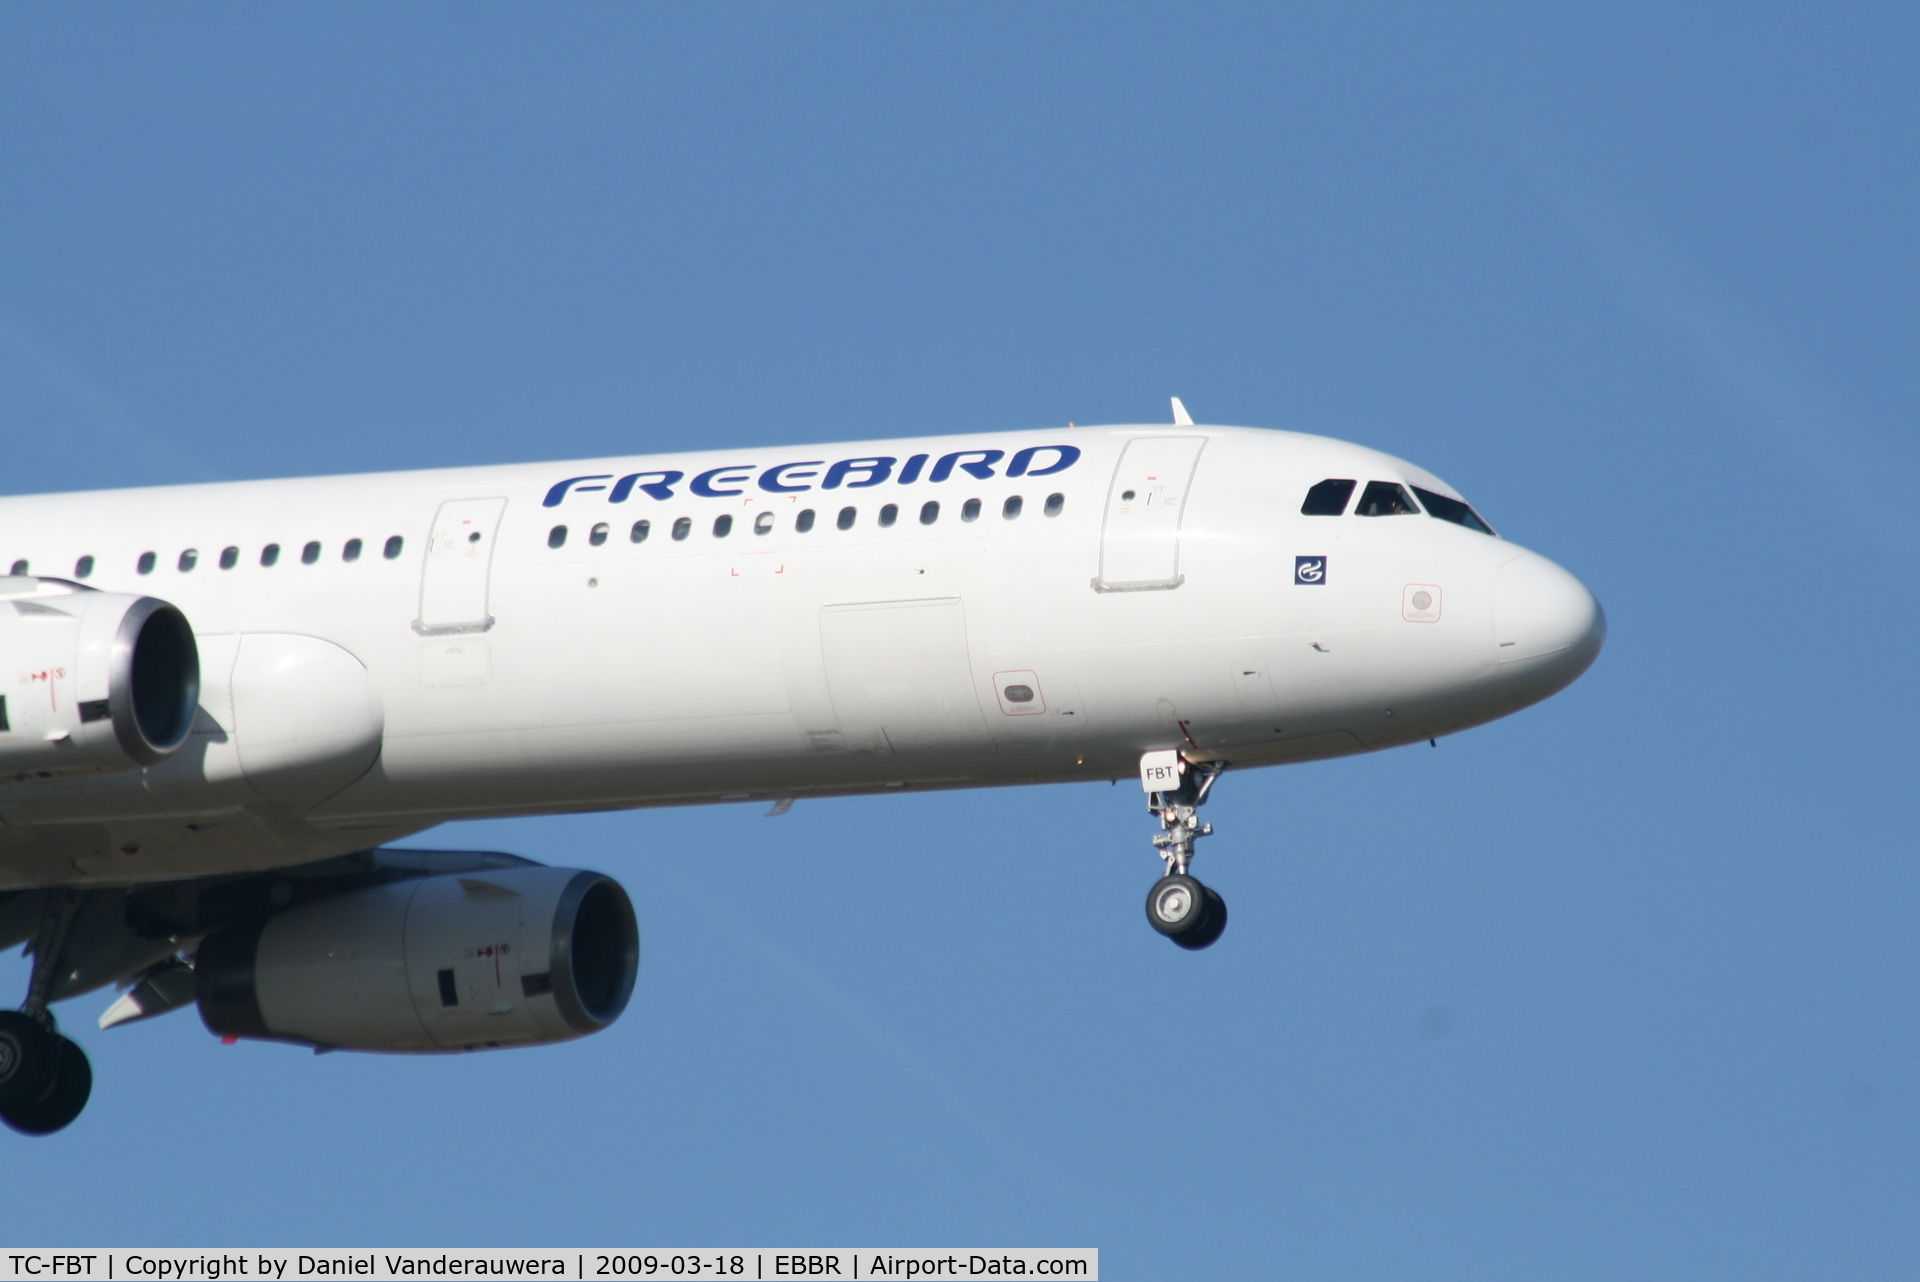 TC-FBT, 1998 Airbus A321-131 C/N 855, arrival of flight FHY577 to rwy 02